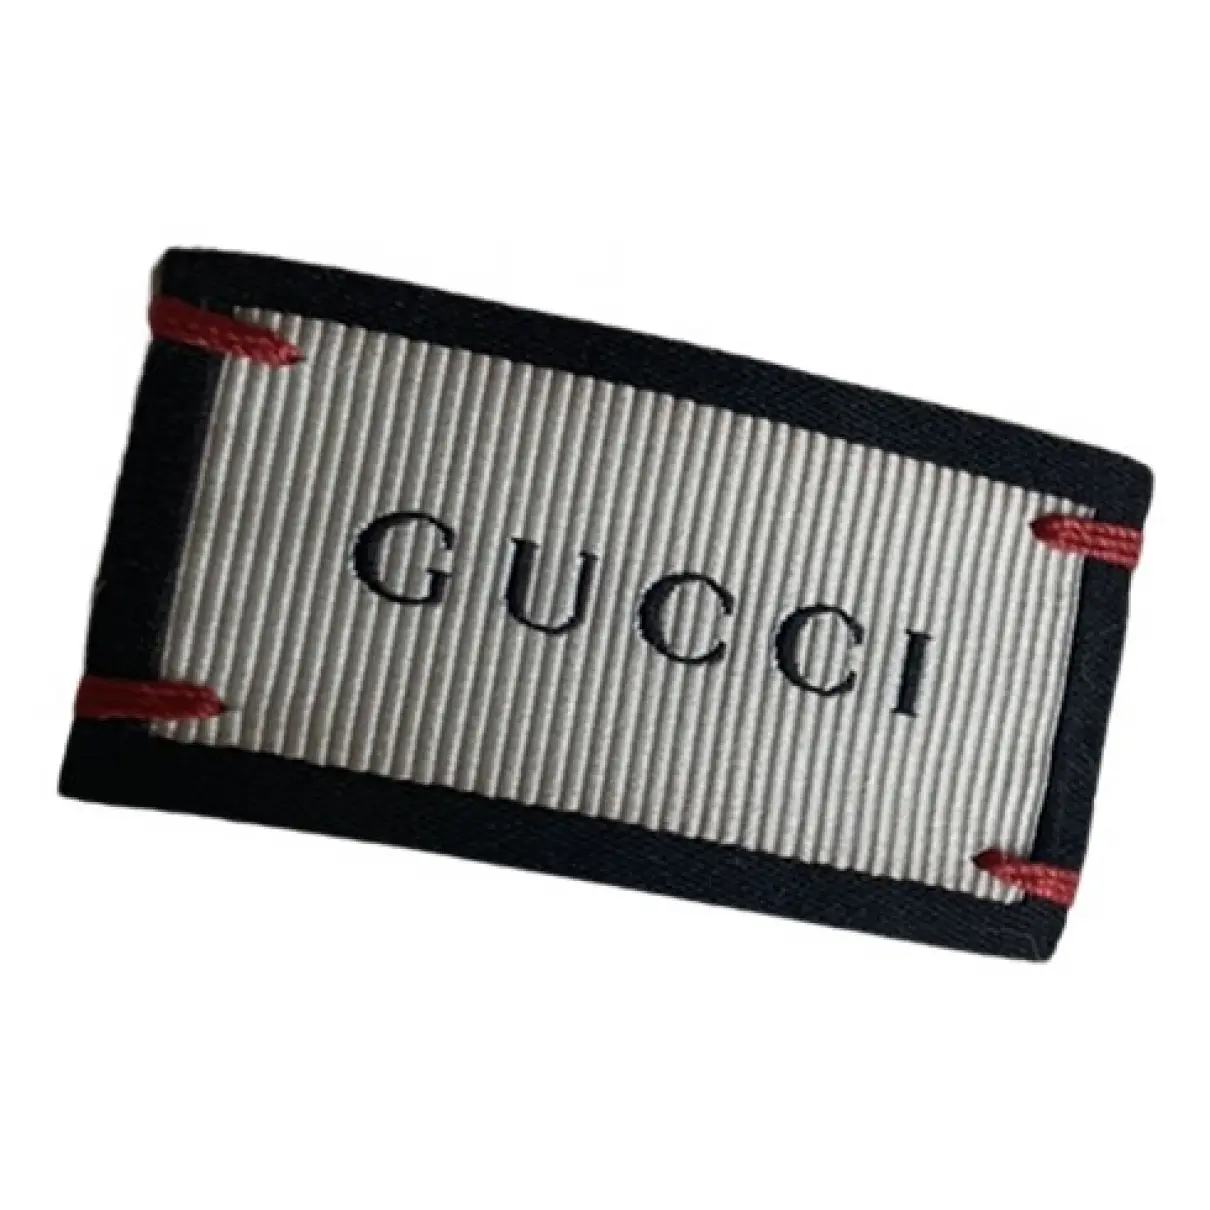 Buy Gucci Silk handkerchief online